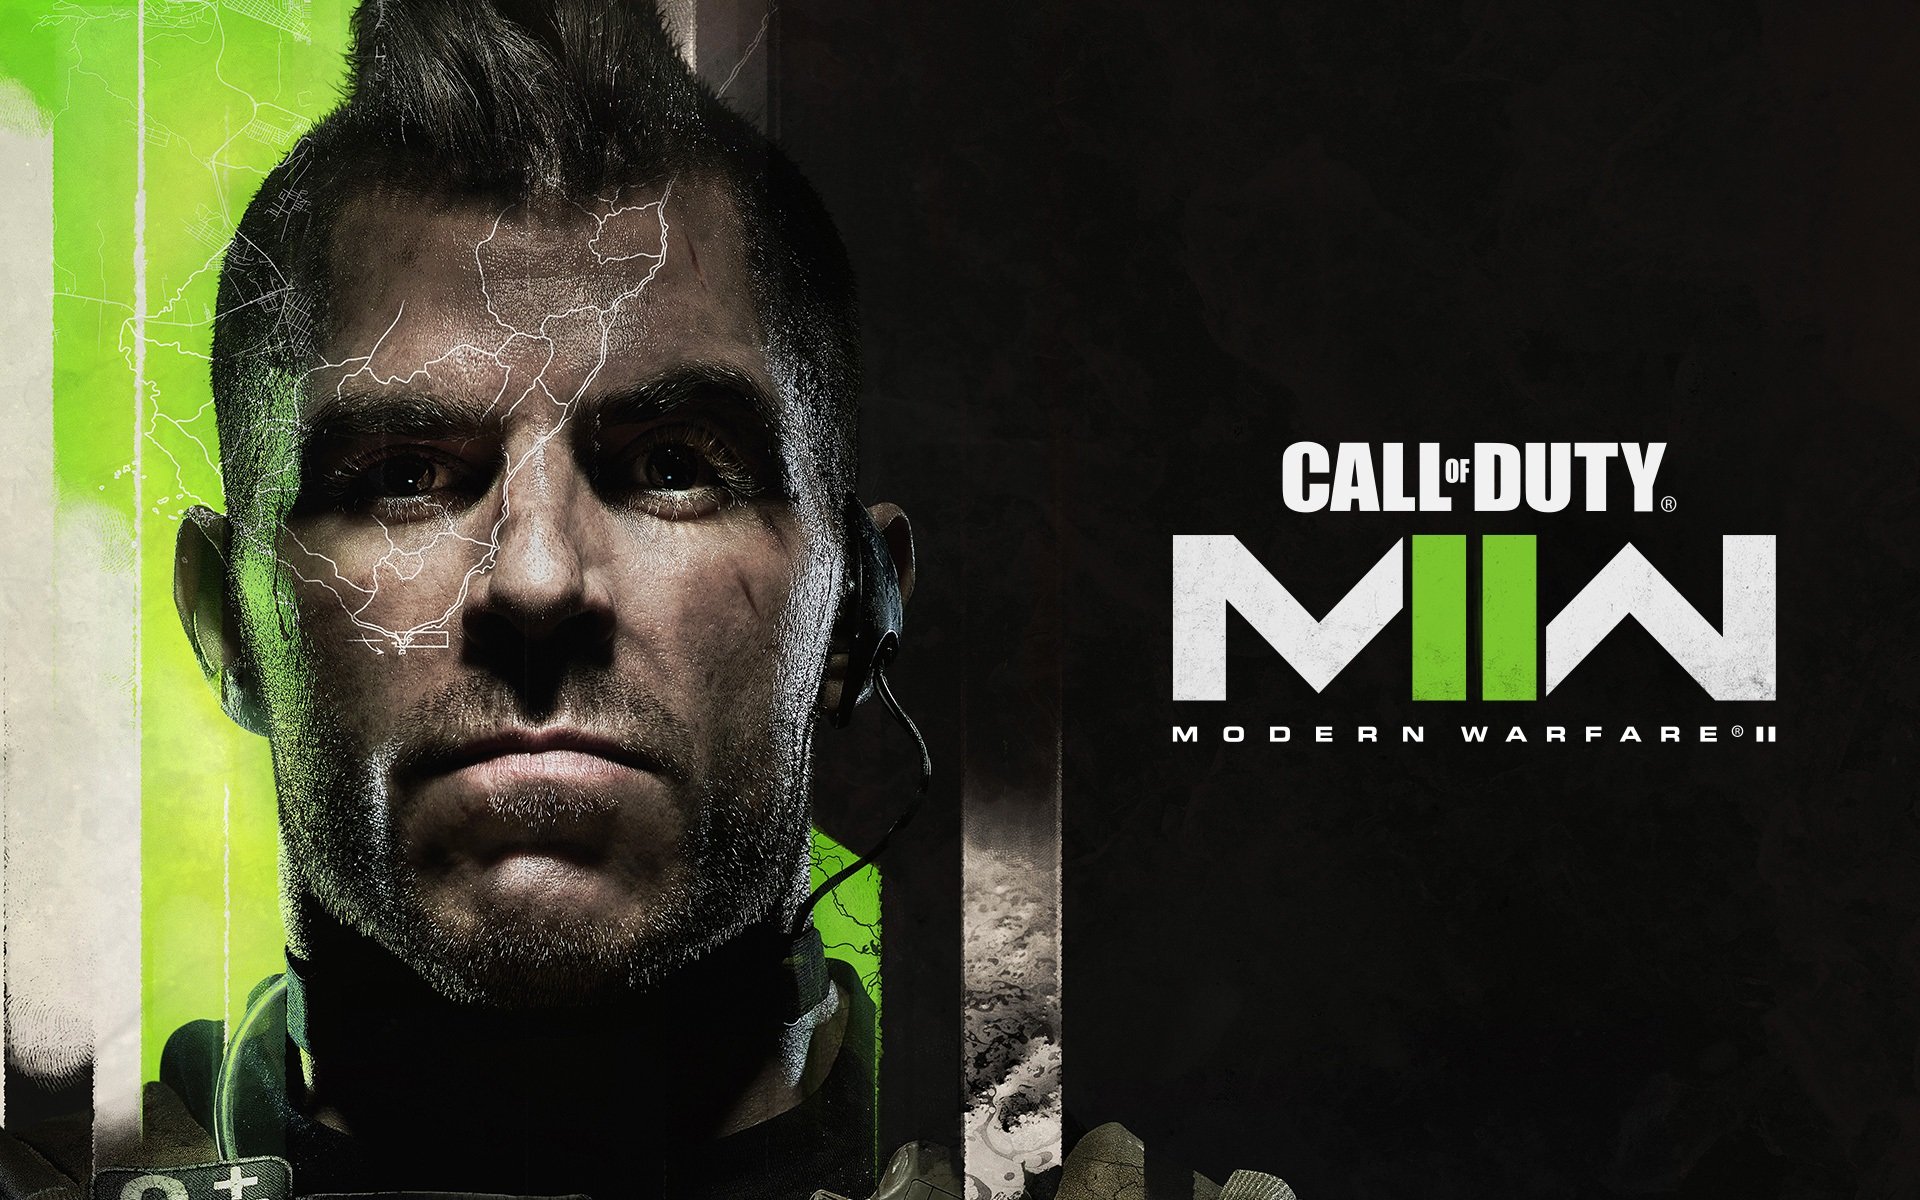 MWII PC Trailer  Call of Duty: Modern Warfare II 